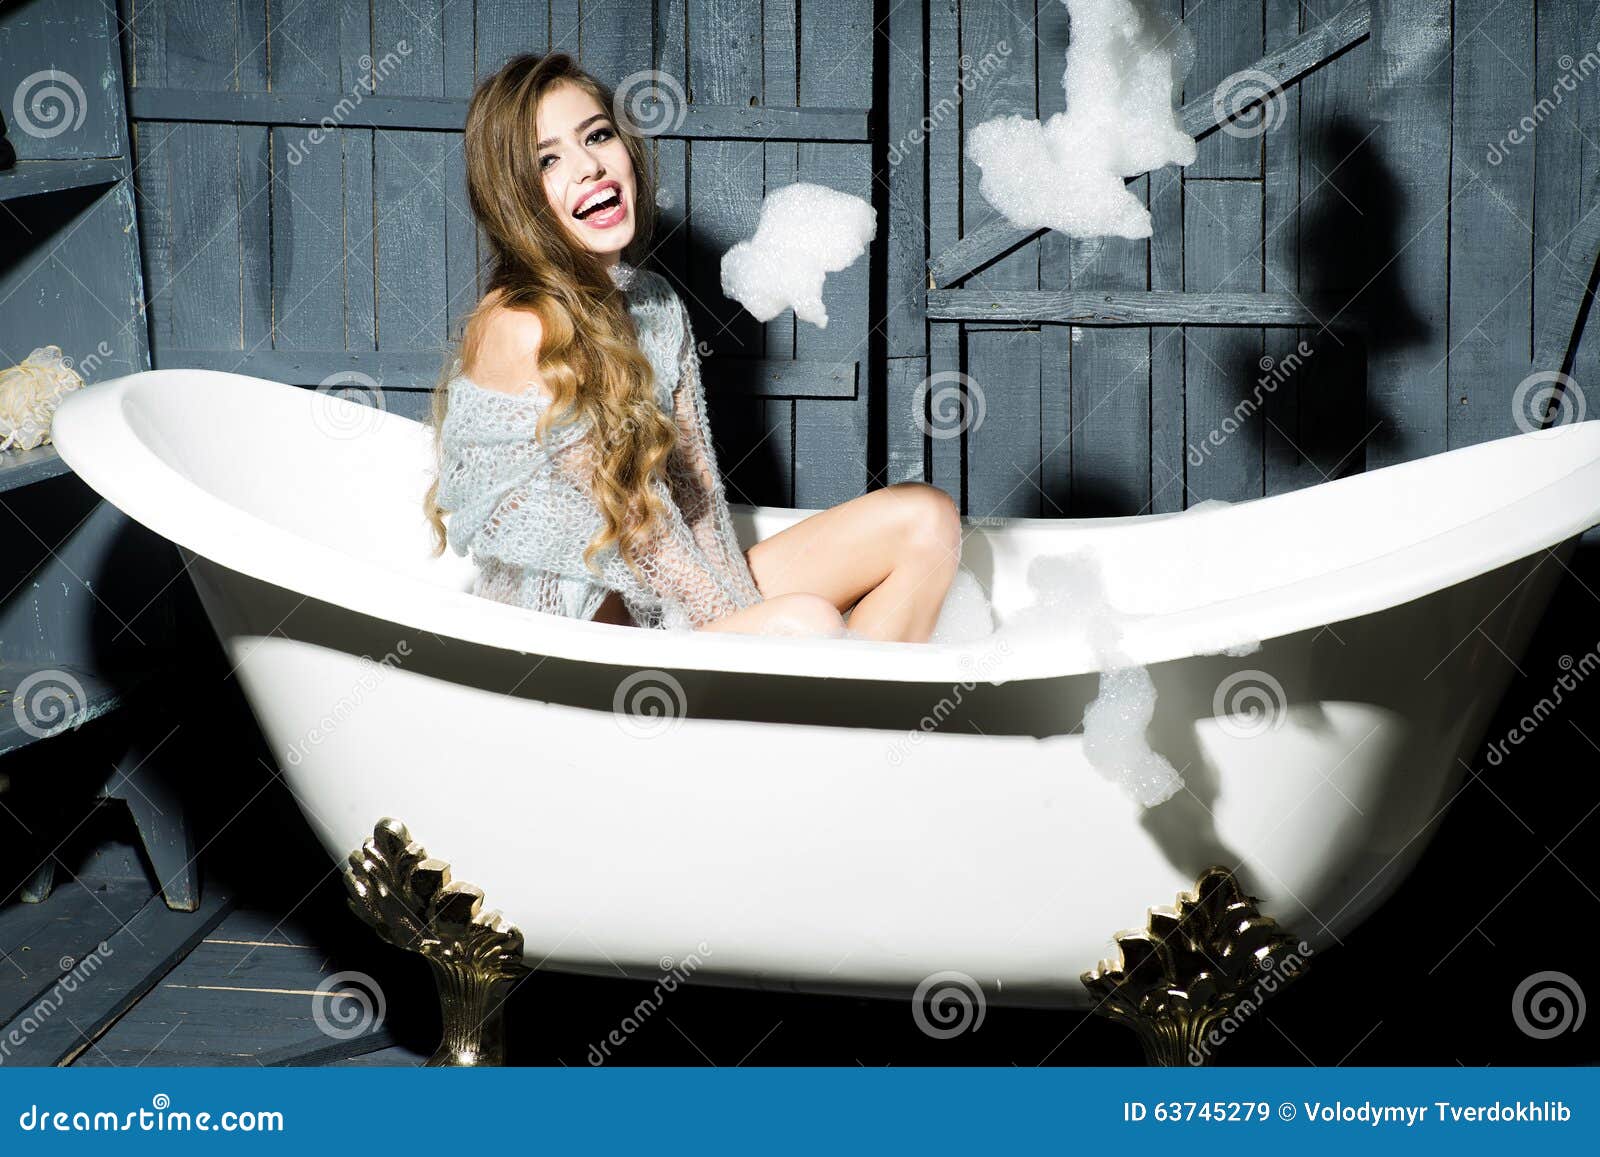 Playful Girl In Bath Stock Image Image Of Gorgeous Bathtub 63745279 